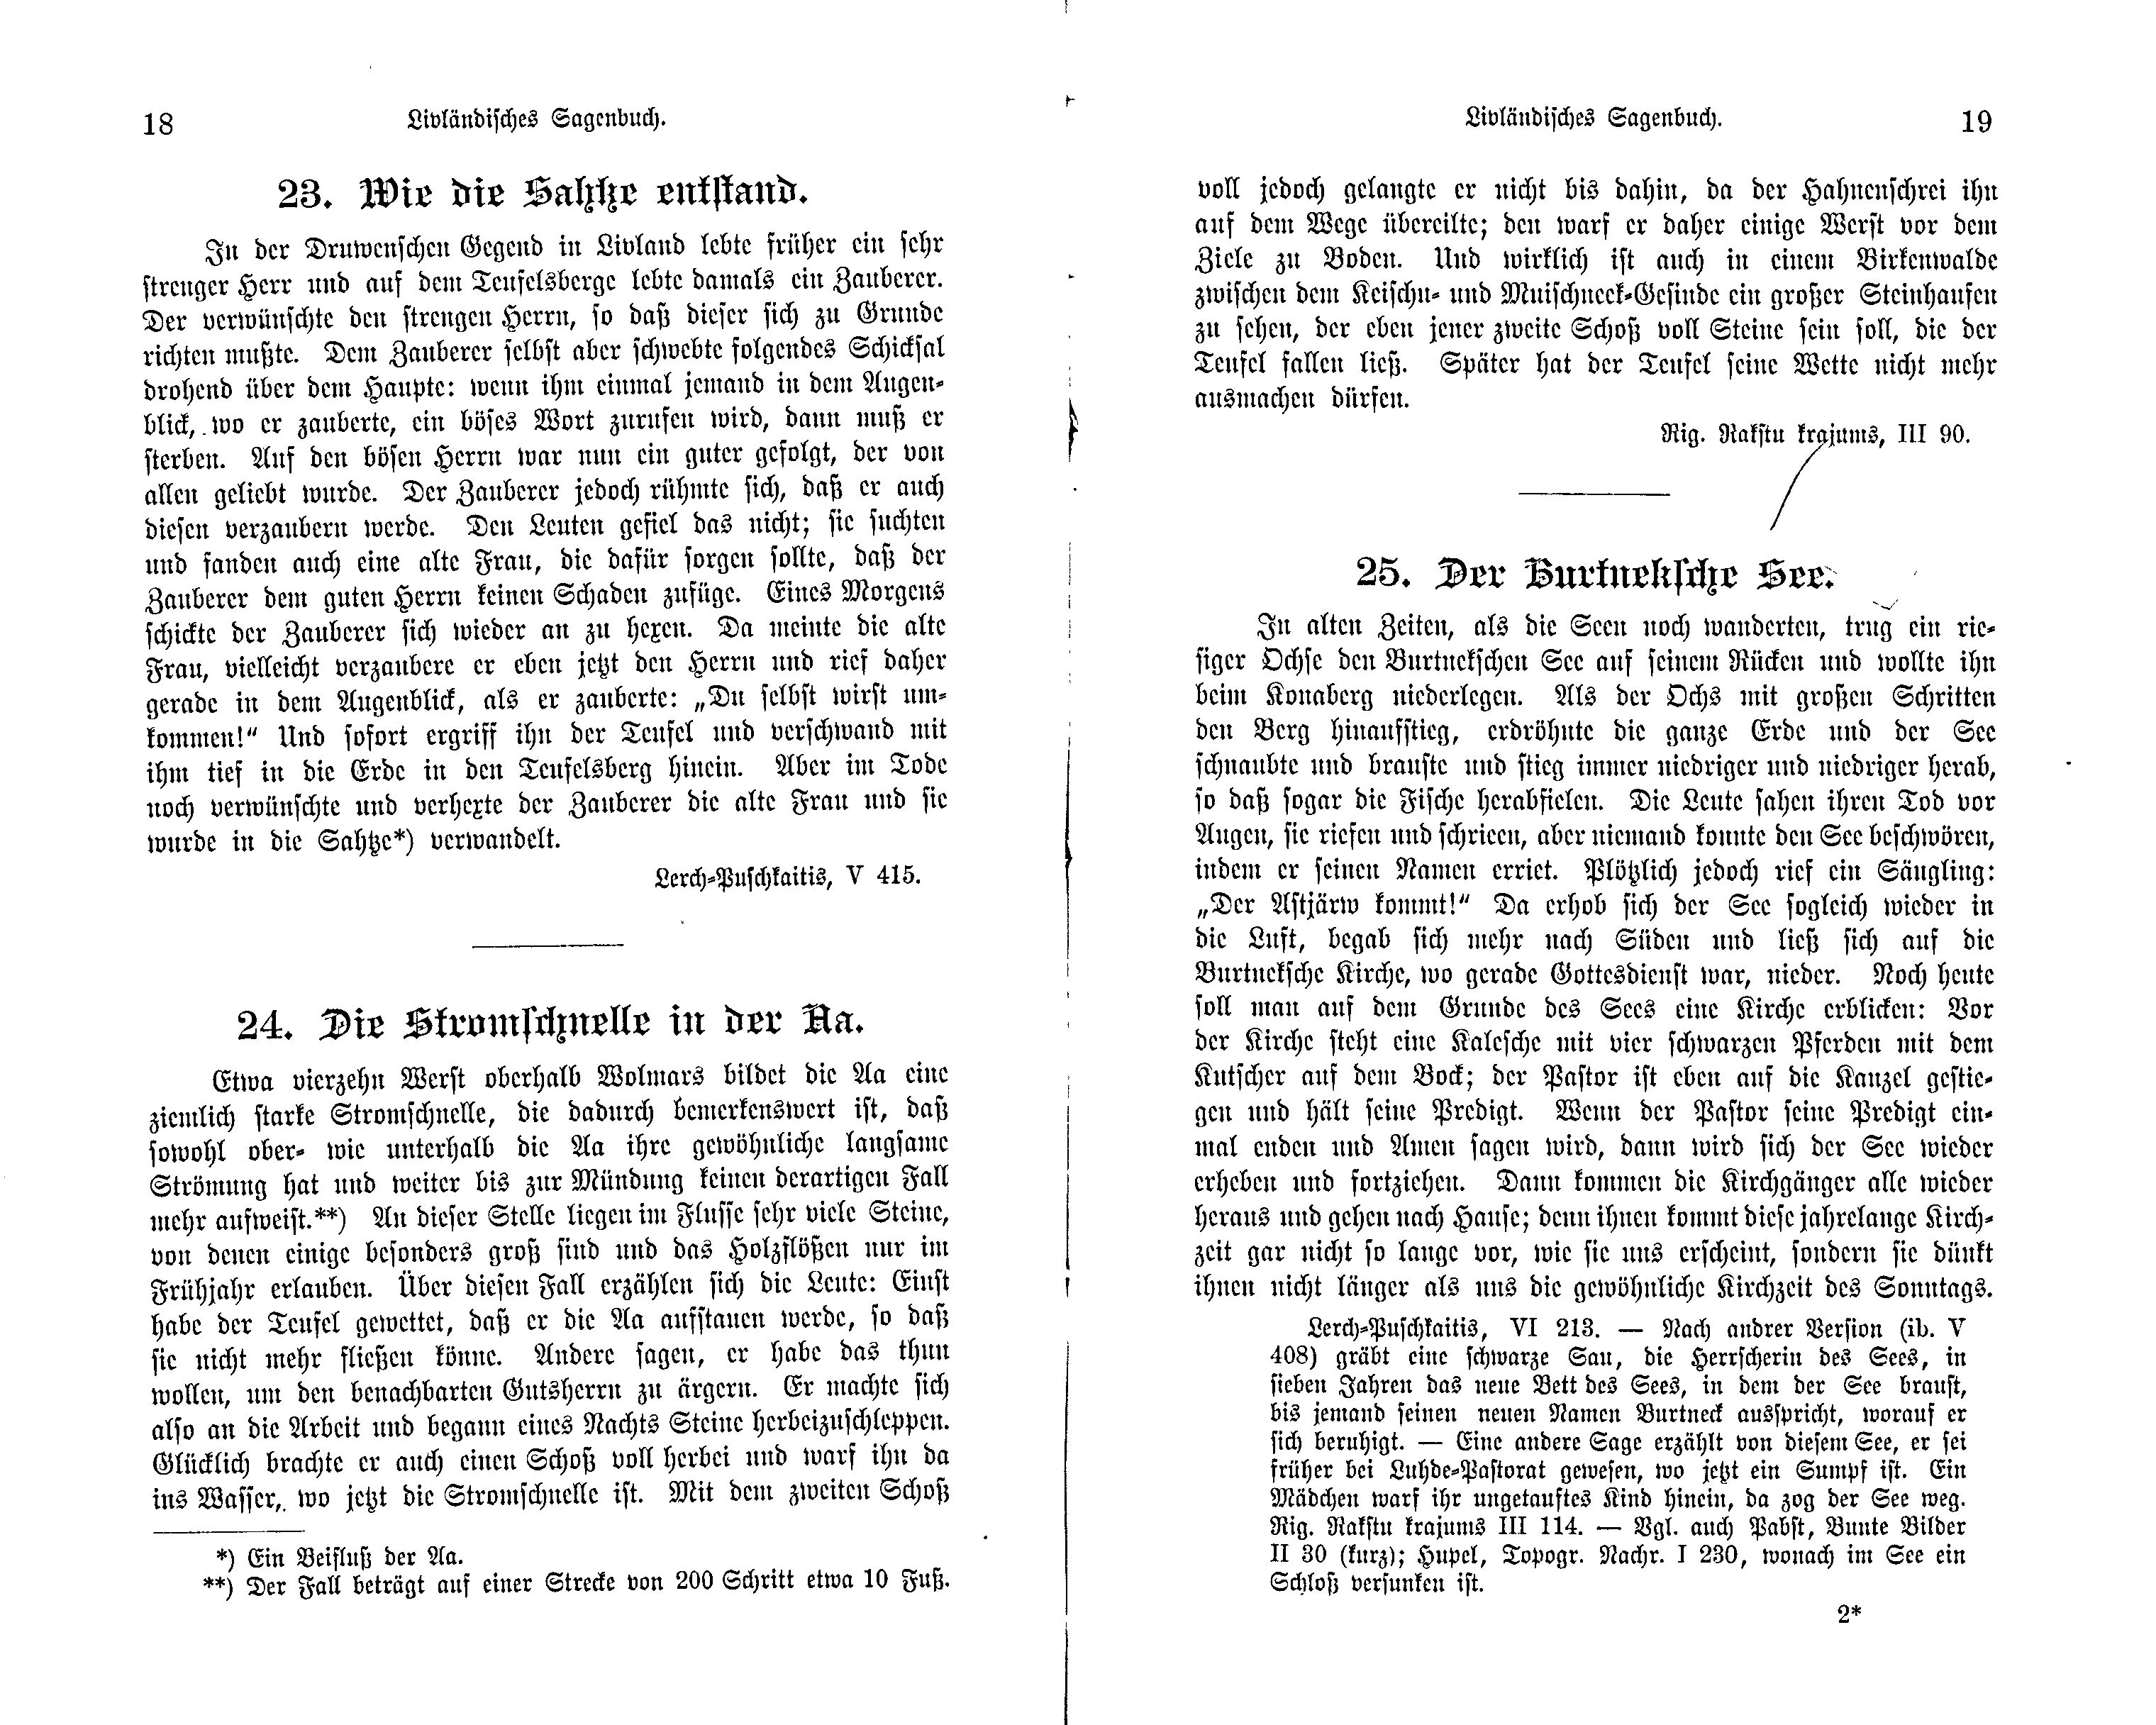 Livländisches Sagenbuch (1897) | 21. (18-19) Основной текст